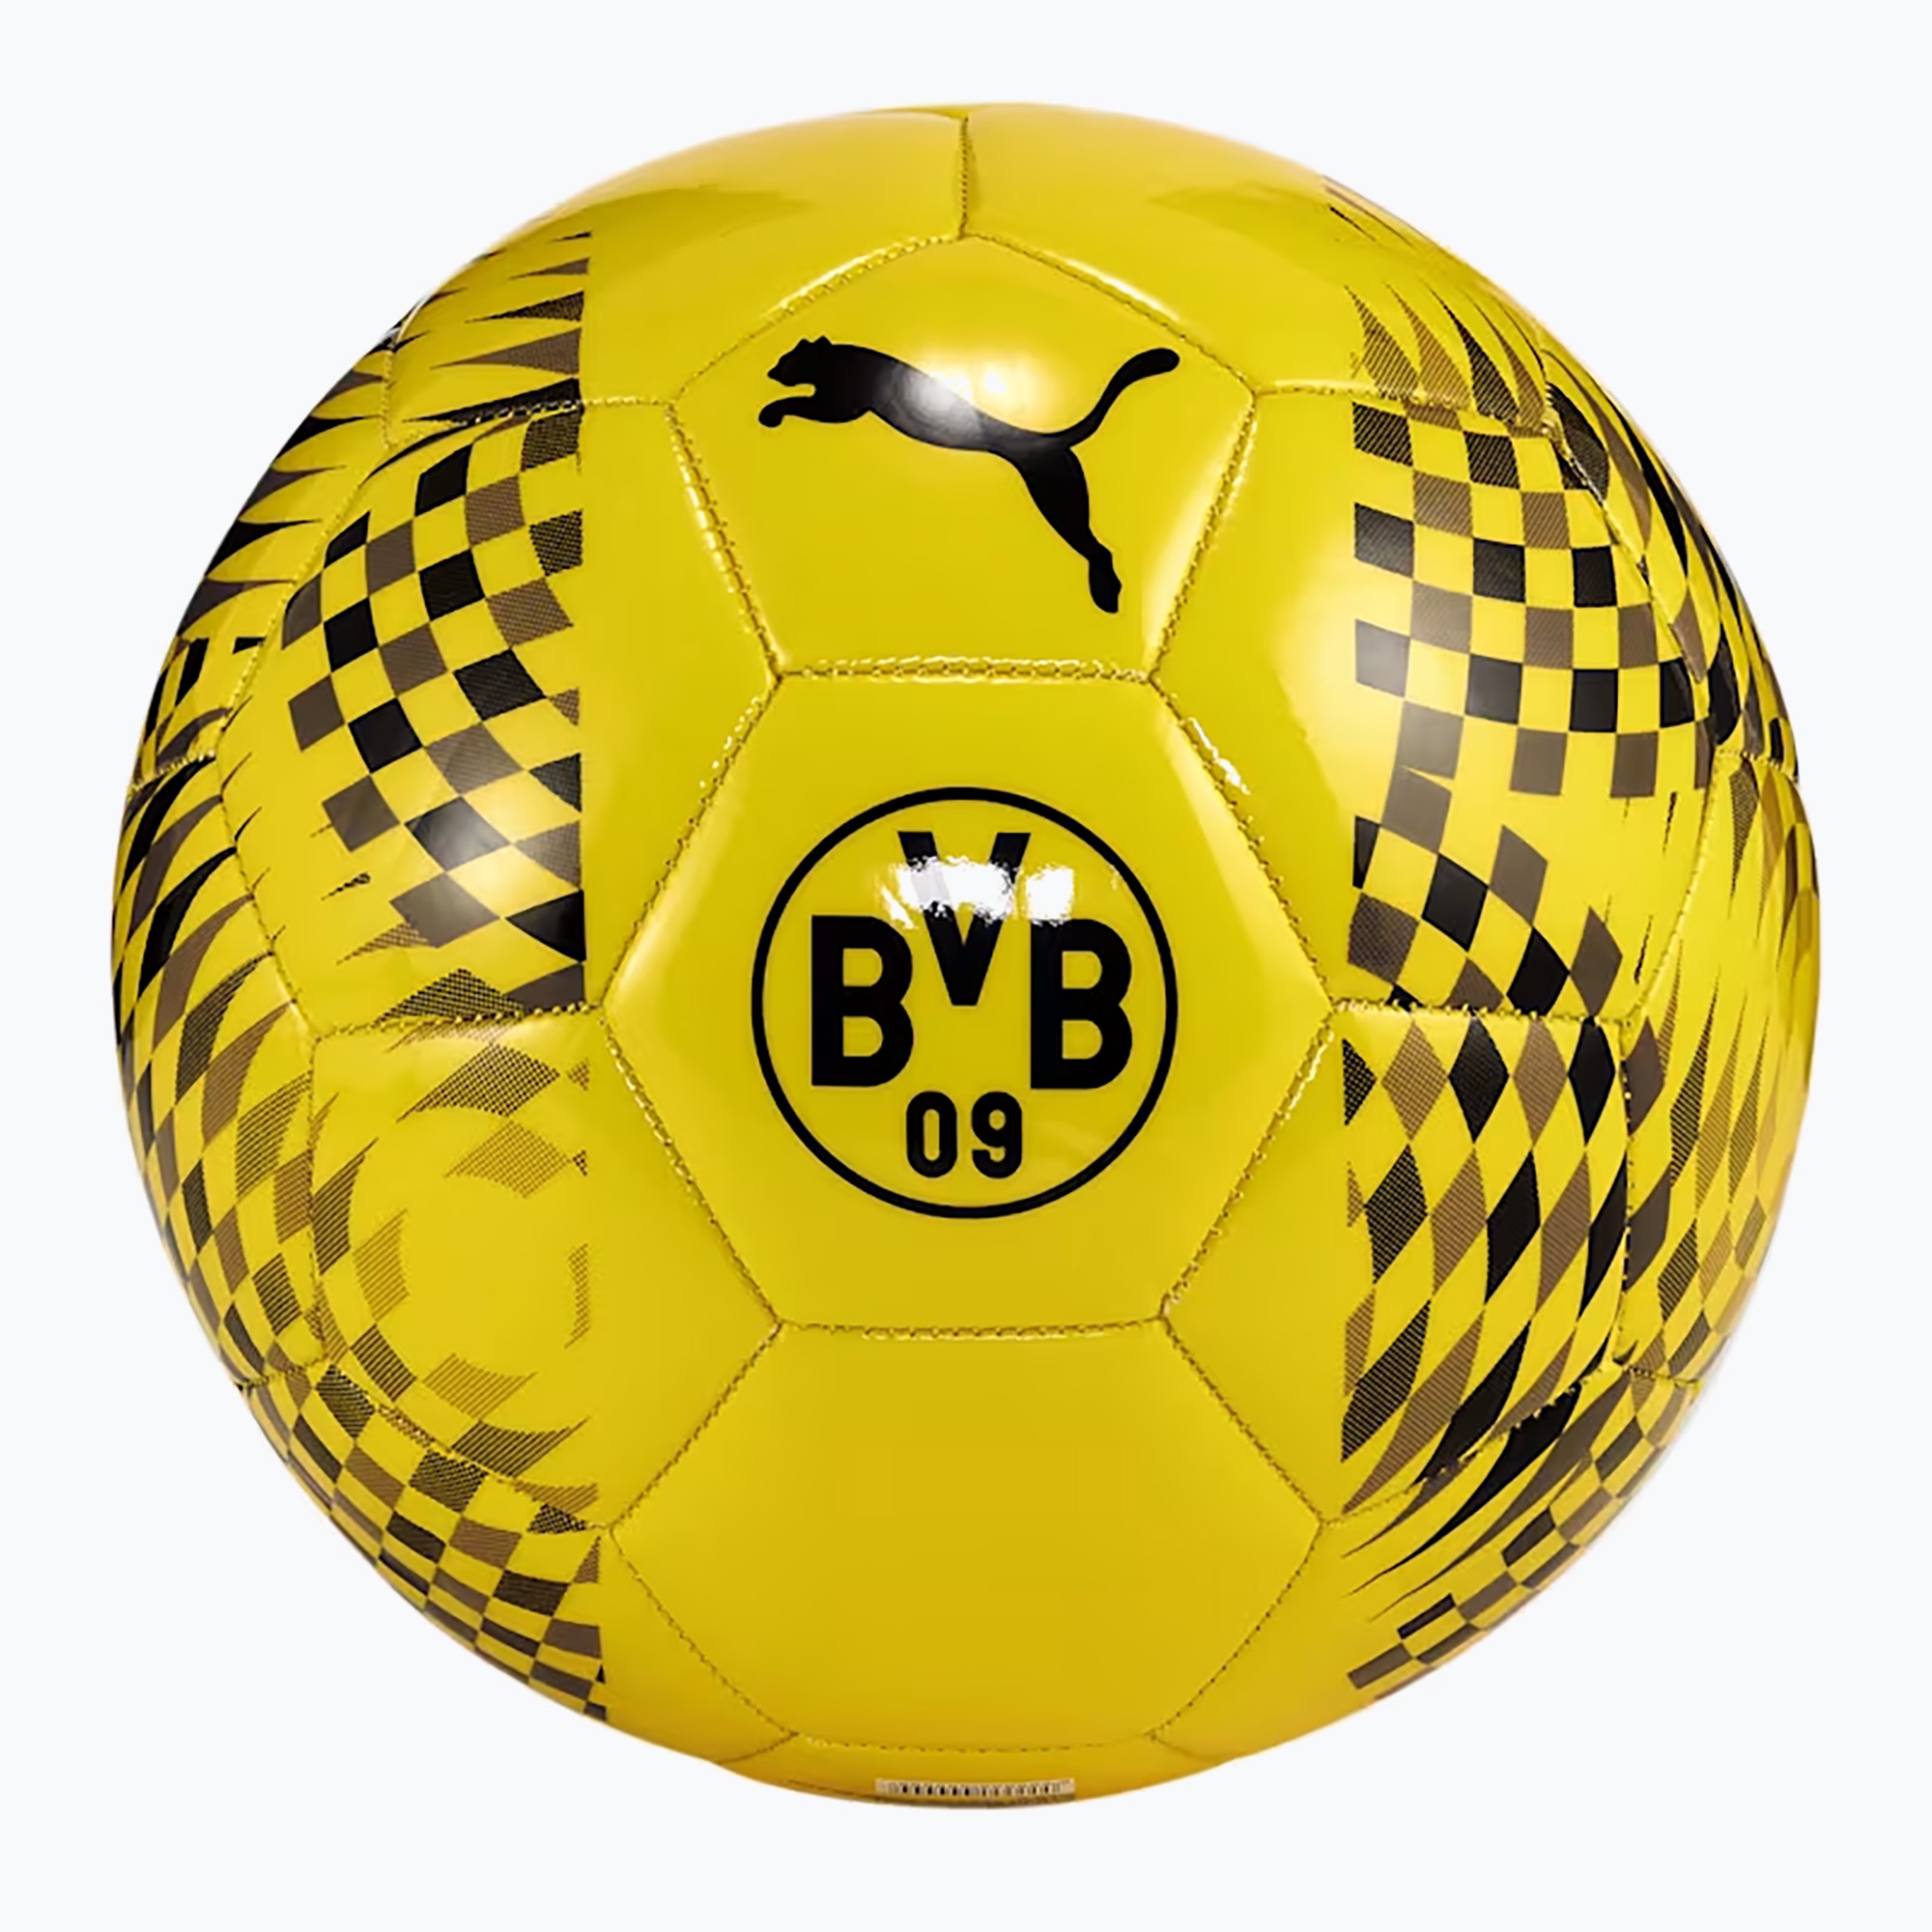 PUMA Borussia Dortmund FtblCore cyber yellow/puma black size 5 football